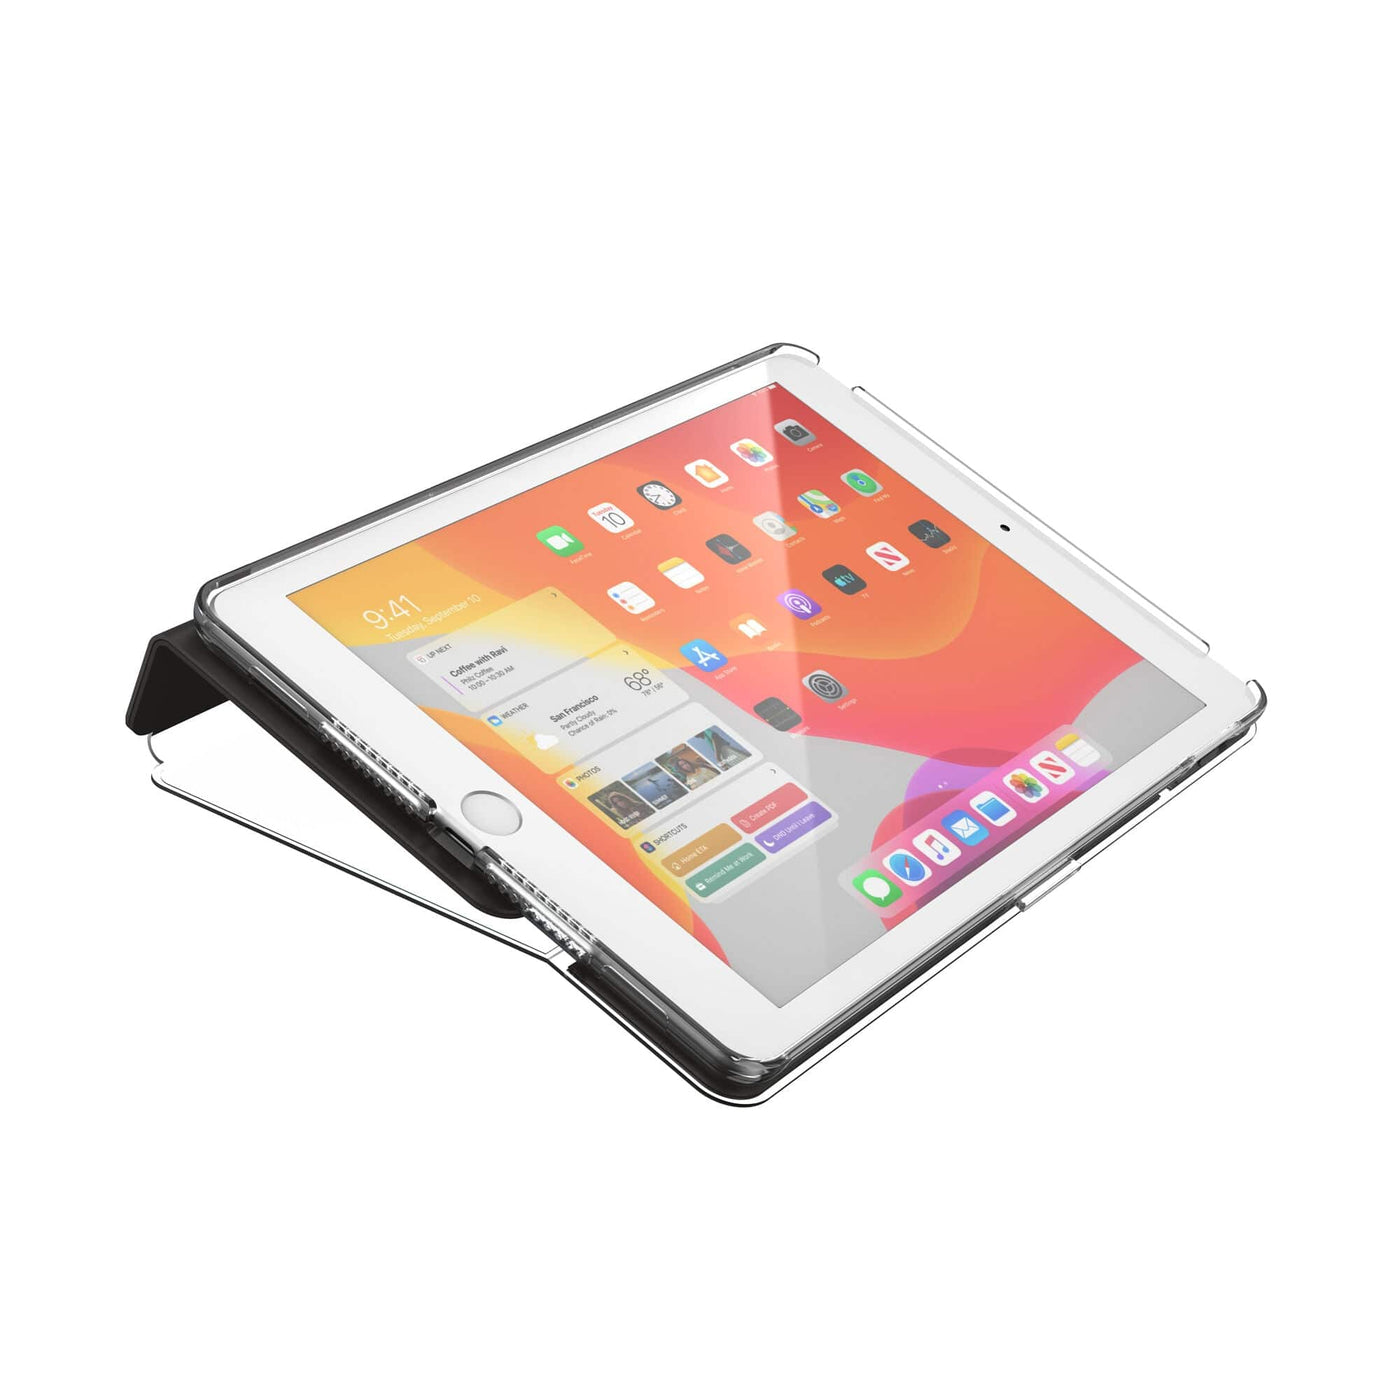 Speck Balance Folio Clear 10.2-inch iPad Cases Best 10.2-inch iPad - $44.99